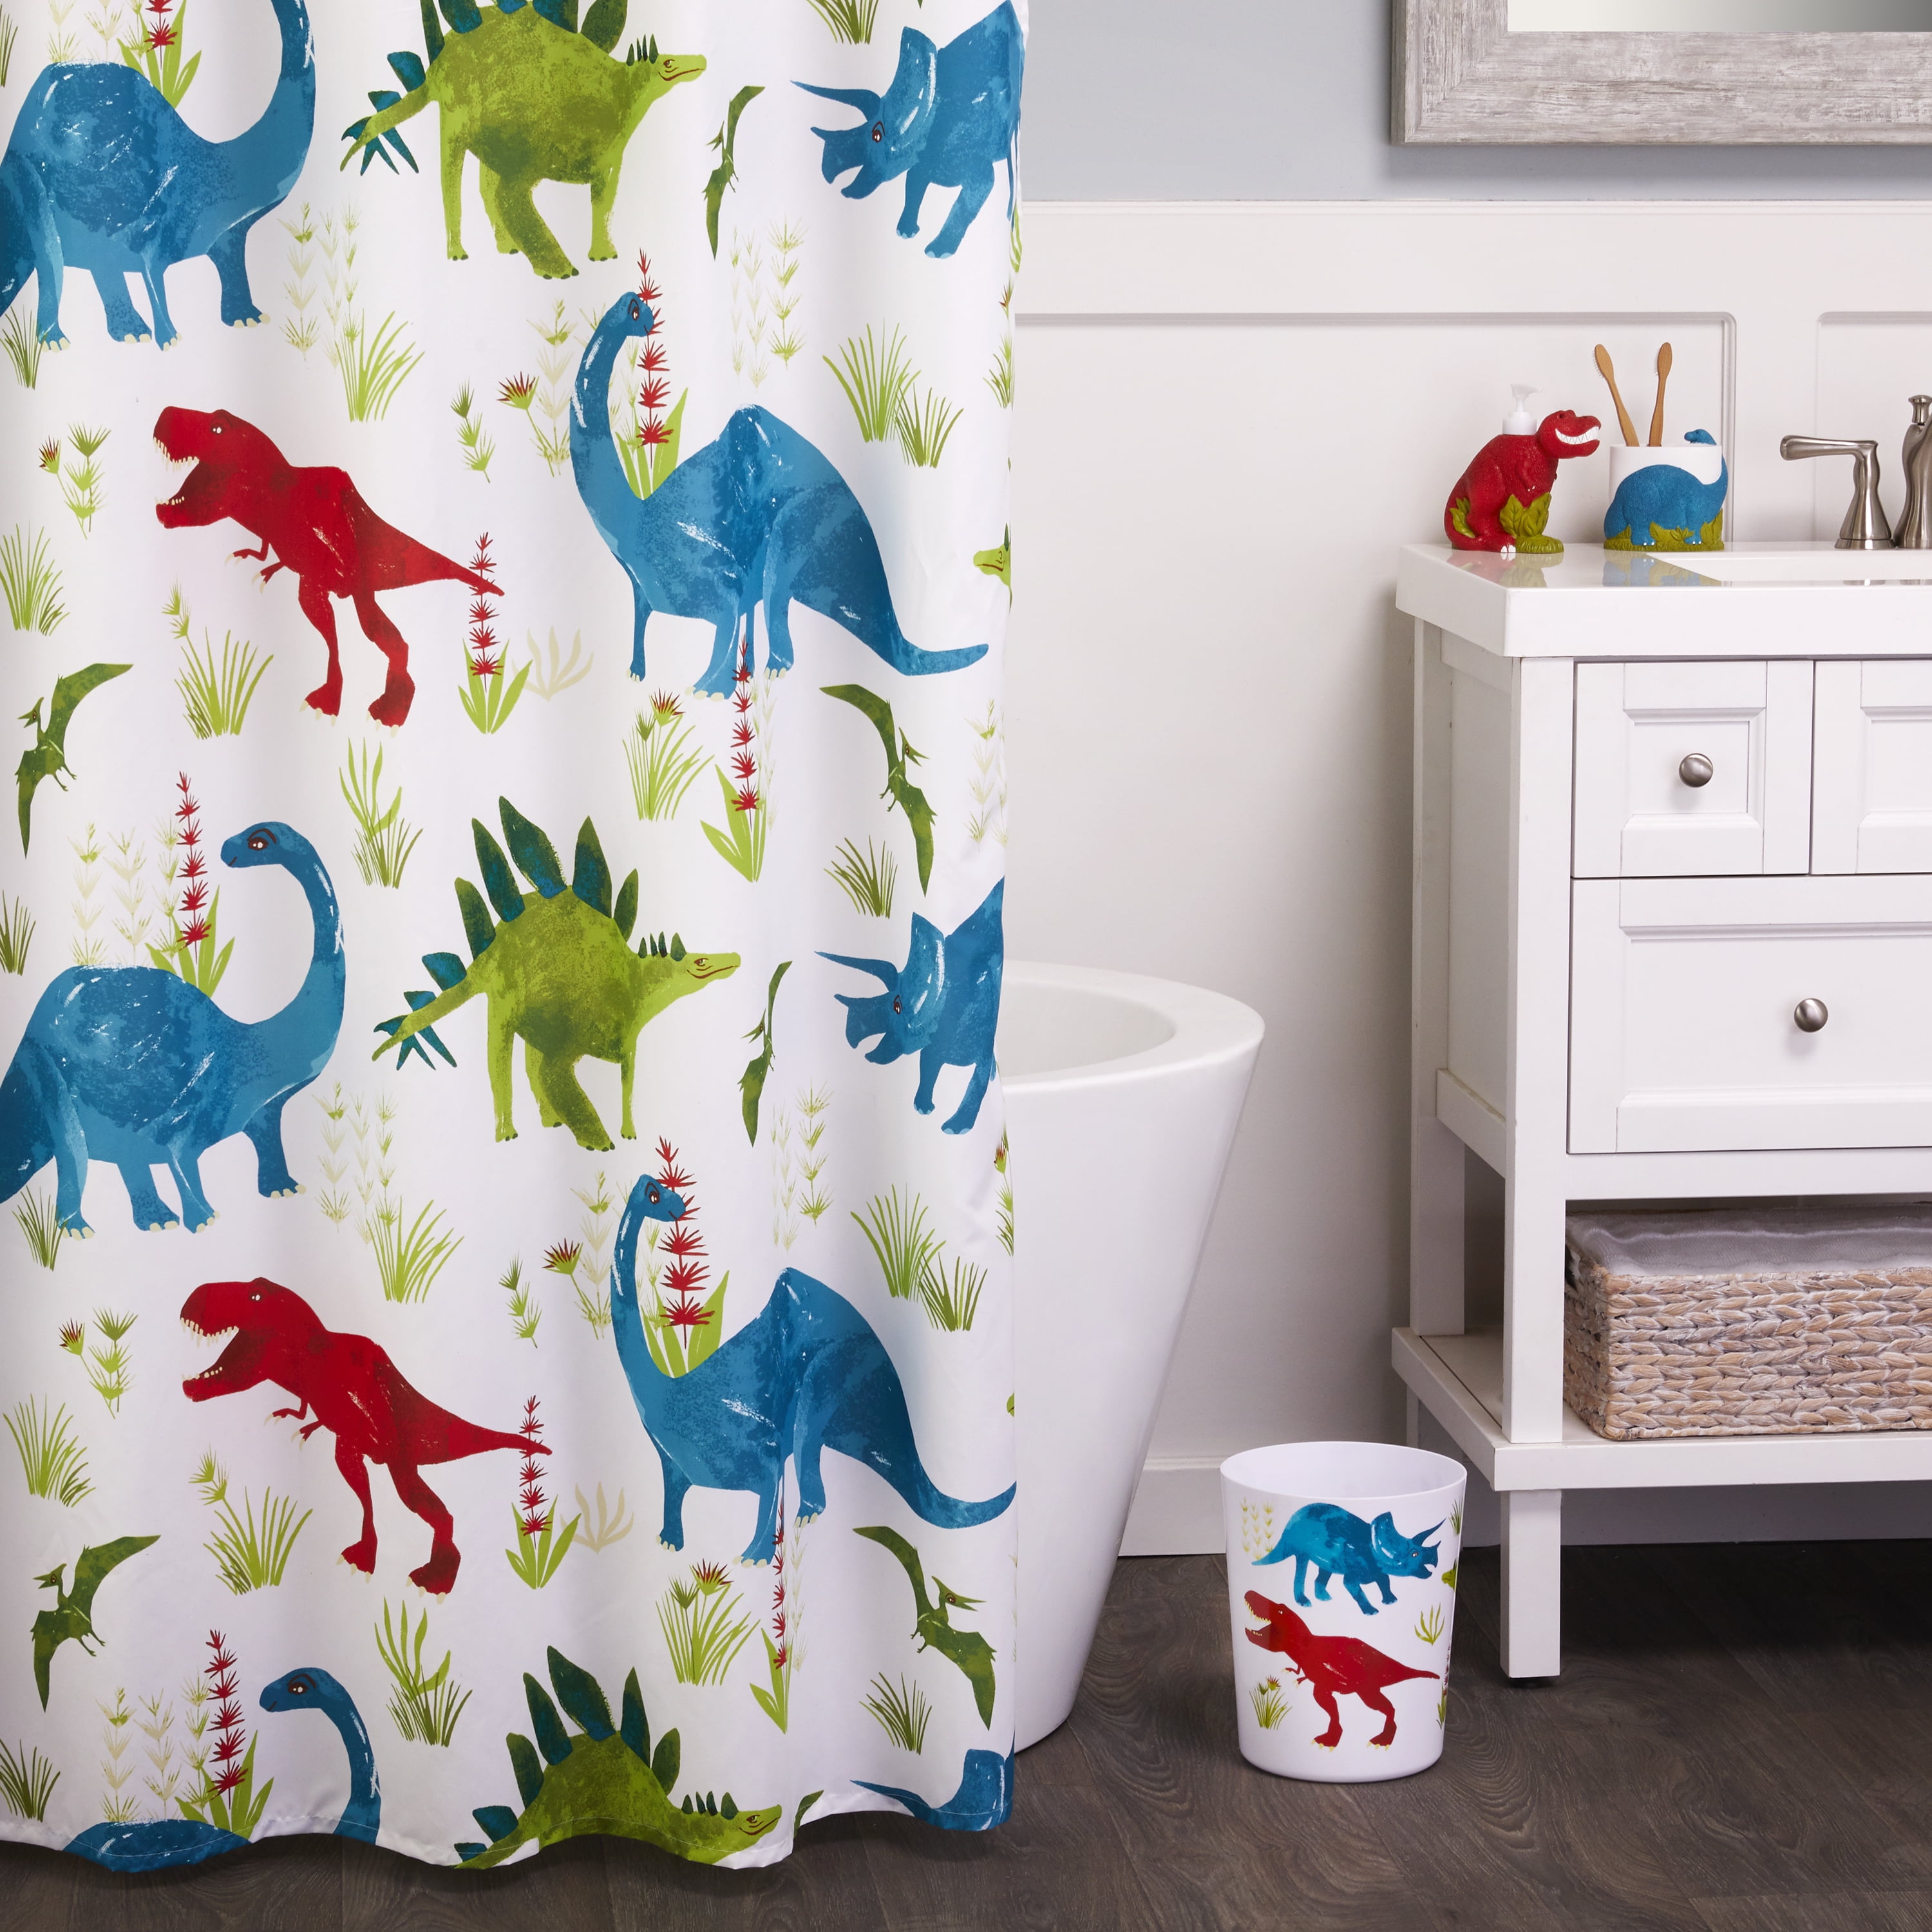 72"Cartoon Dinosaur Map Waterproof Fabric Shower Curtain Kids Child Bathroom Set 